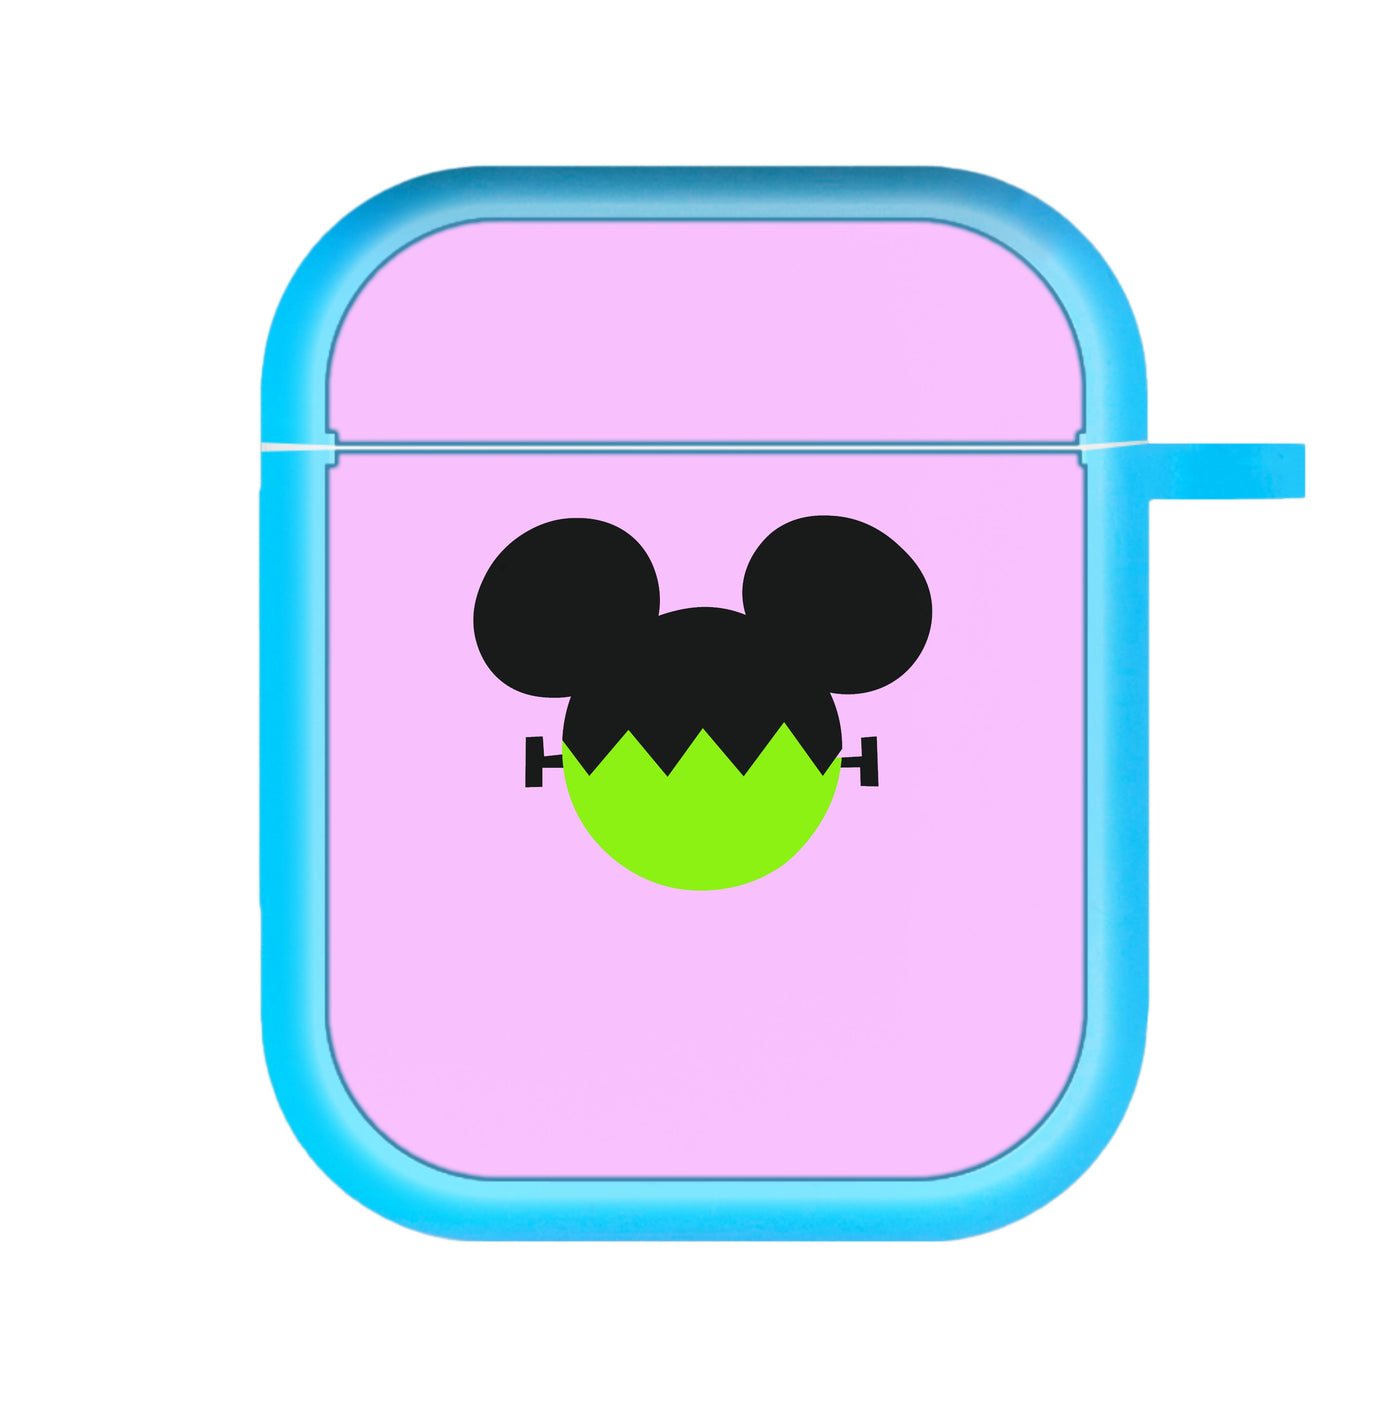 Frankenstein Mickey Mouse - Disney Halloween AirPods Case